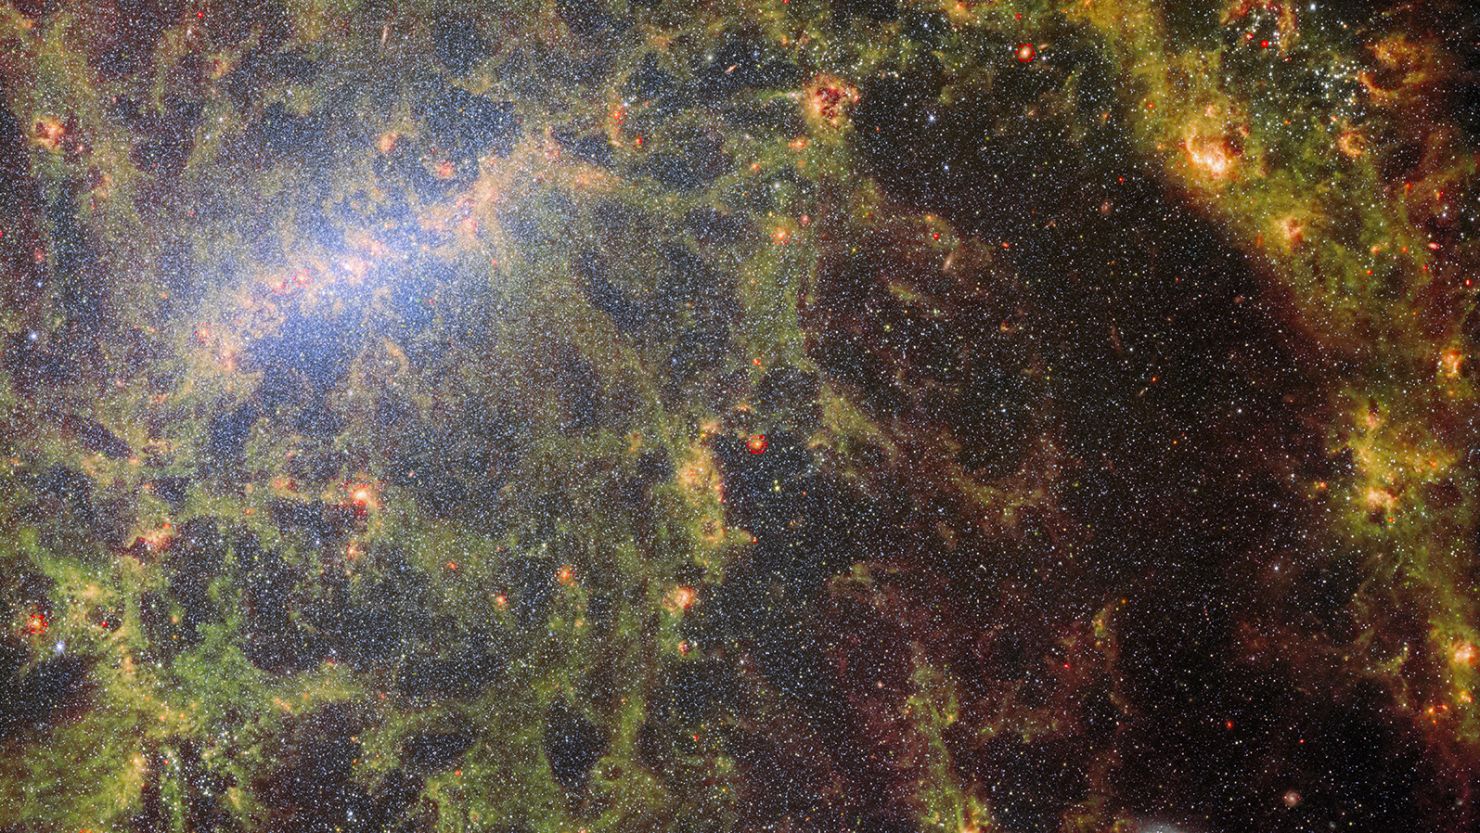 Astronomers Discover “Invisible” Galaxy - Sky & Telescope - Sky & Telescope